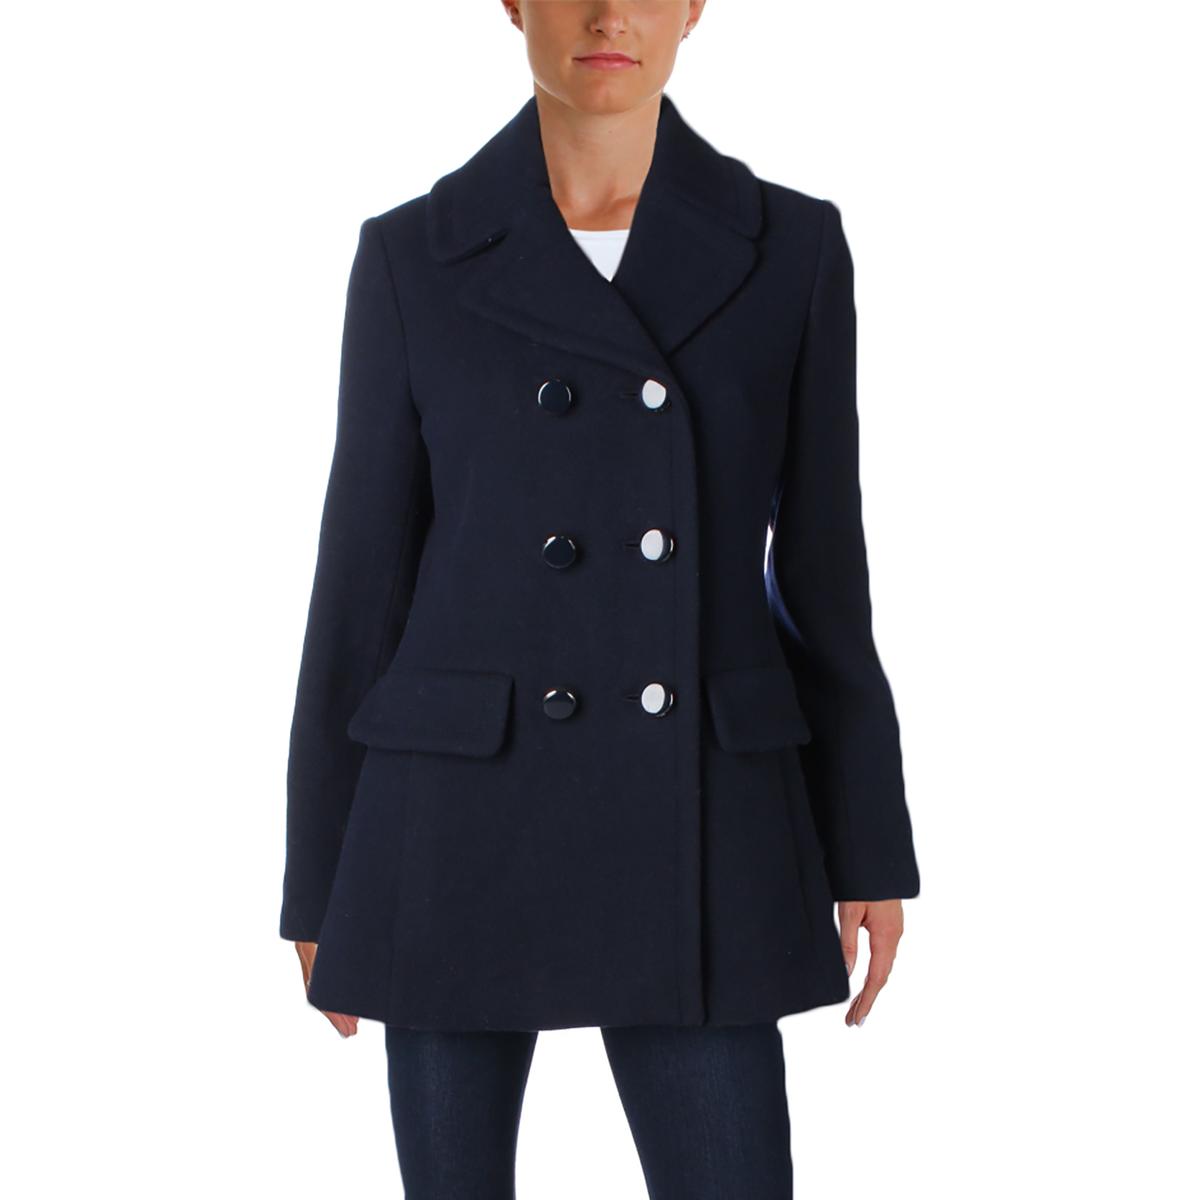 Kate Spade Womens Fall Wool Fashion Pea Coat ... - Your Family ...